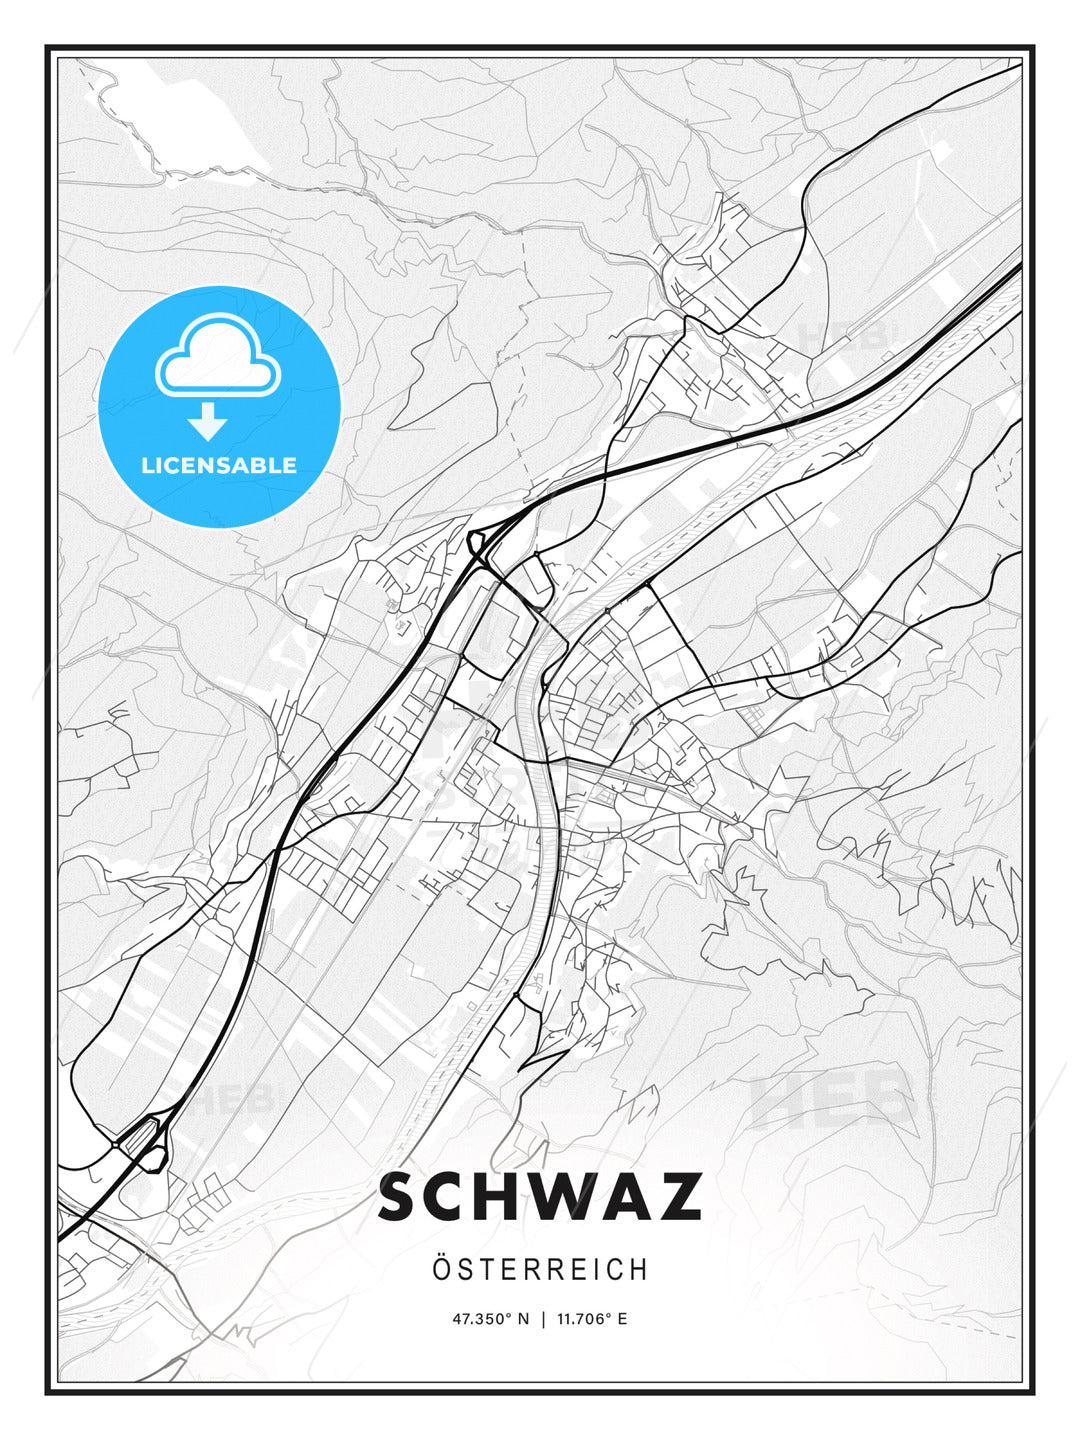 Schwaz, Austria, Modern Print Template in Various Formats - HEBSTREITS Sketches